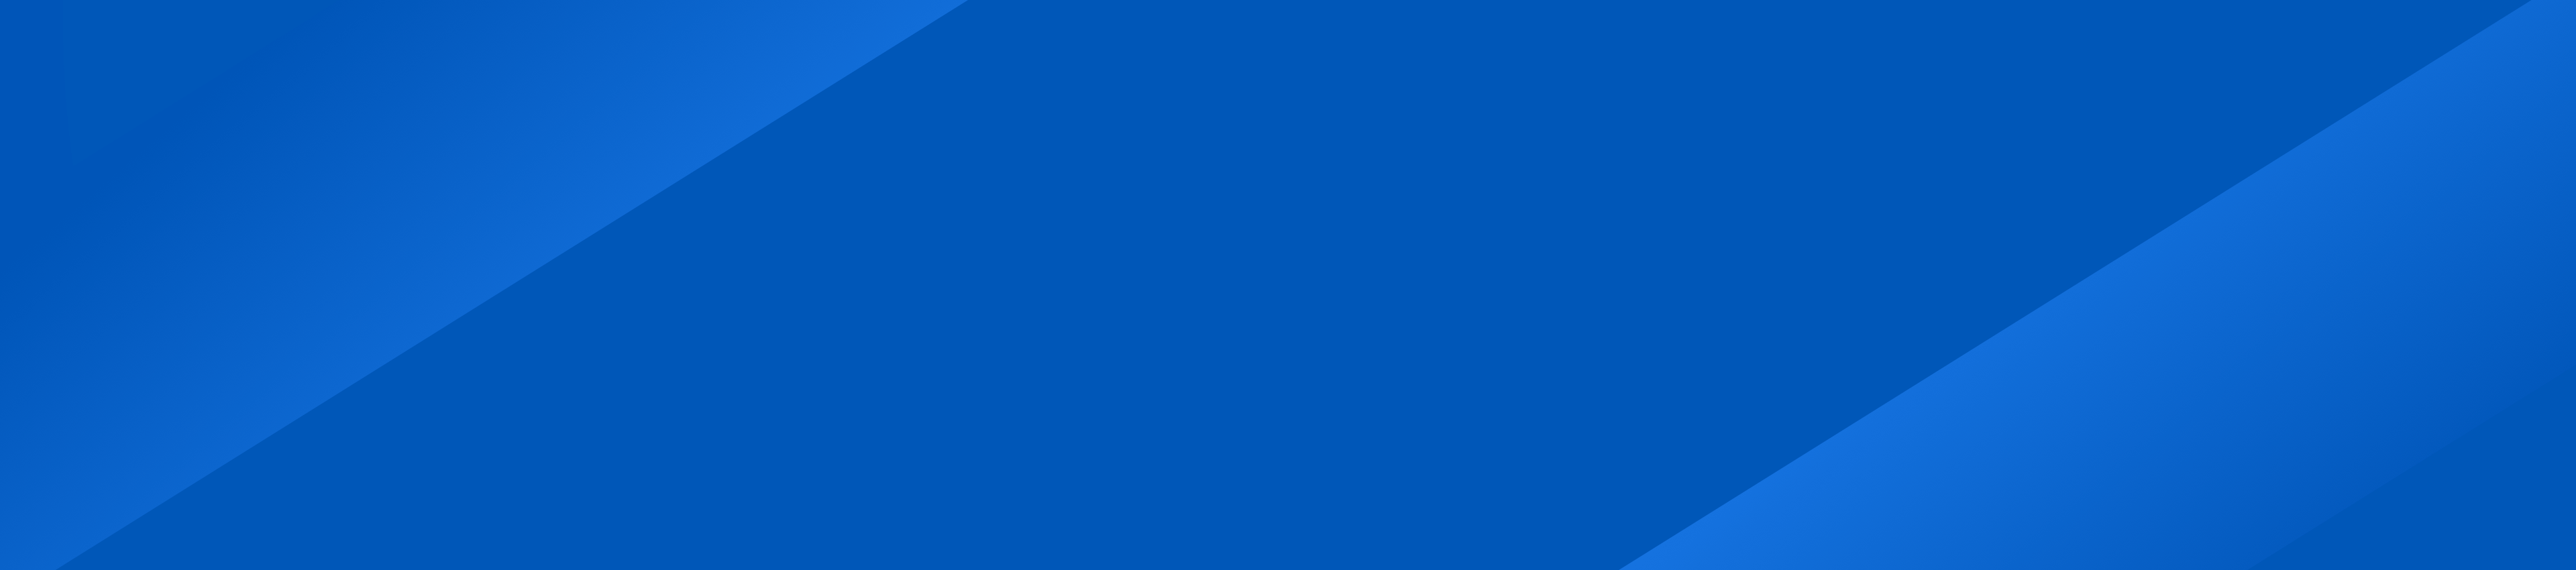 Blue logo gradient graphic background.